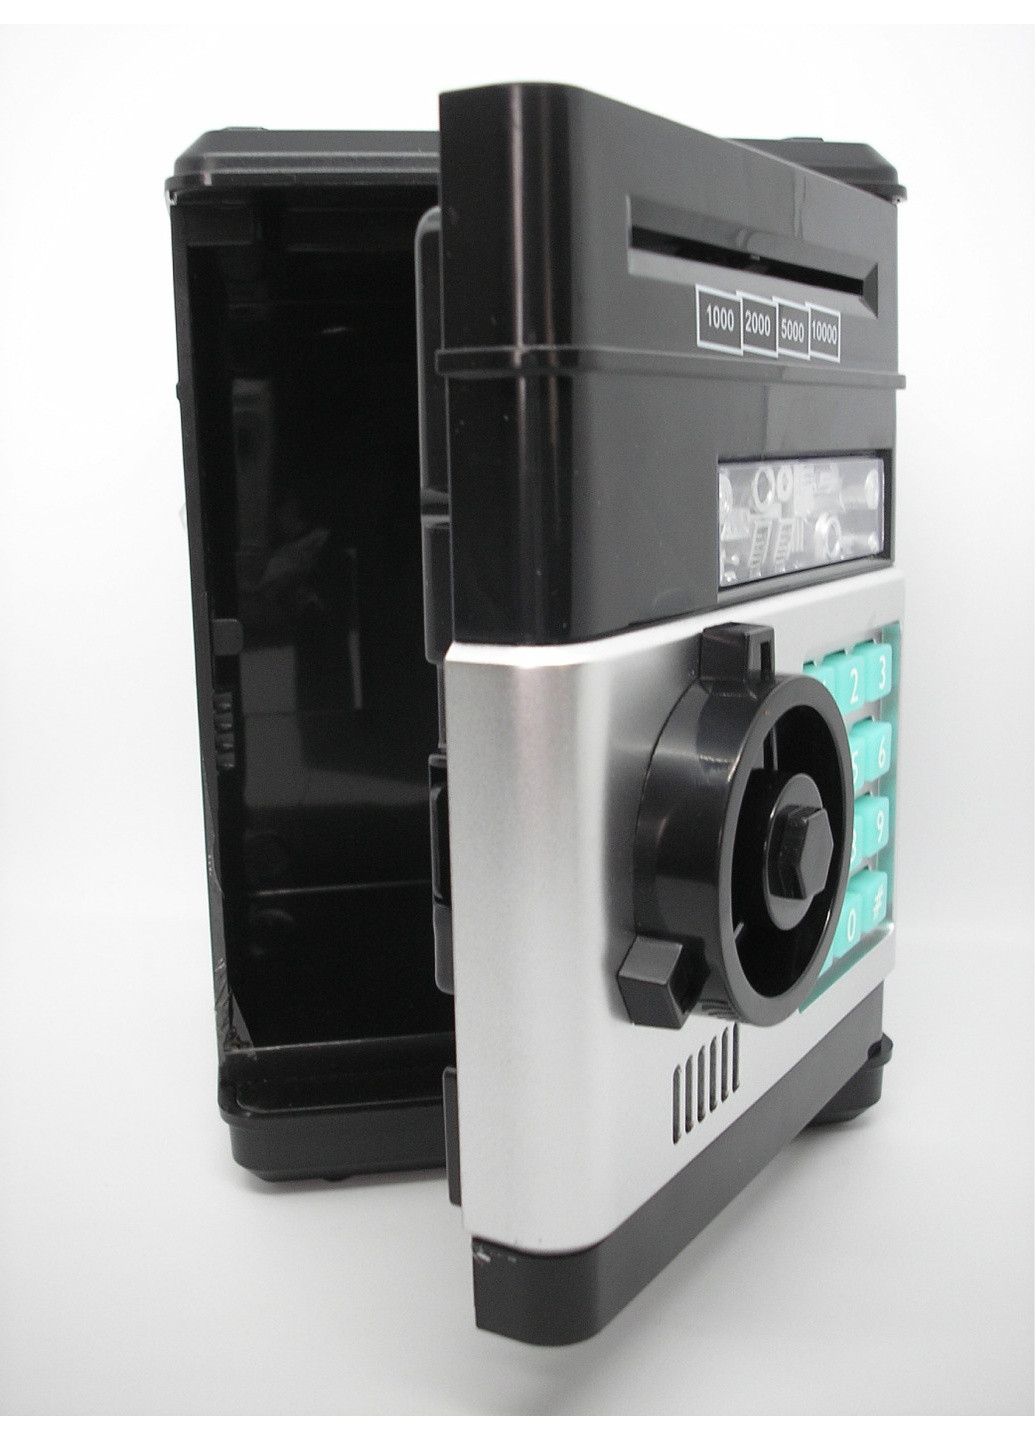 Сейф скарбничка банкомат електронна з купюроприймачем звуковими ефектами та кодовим замком затягує купюри No Brand (259735690)